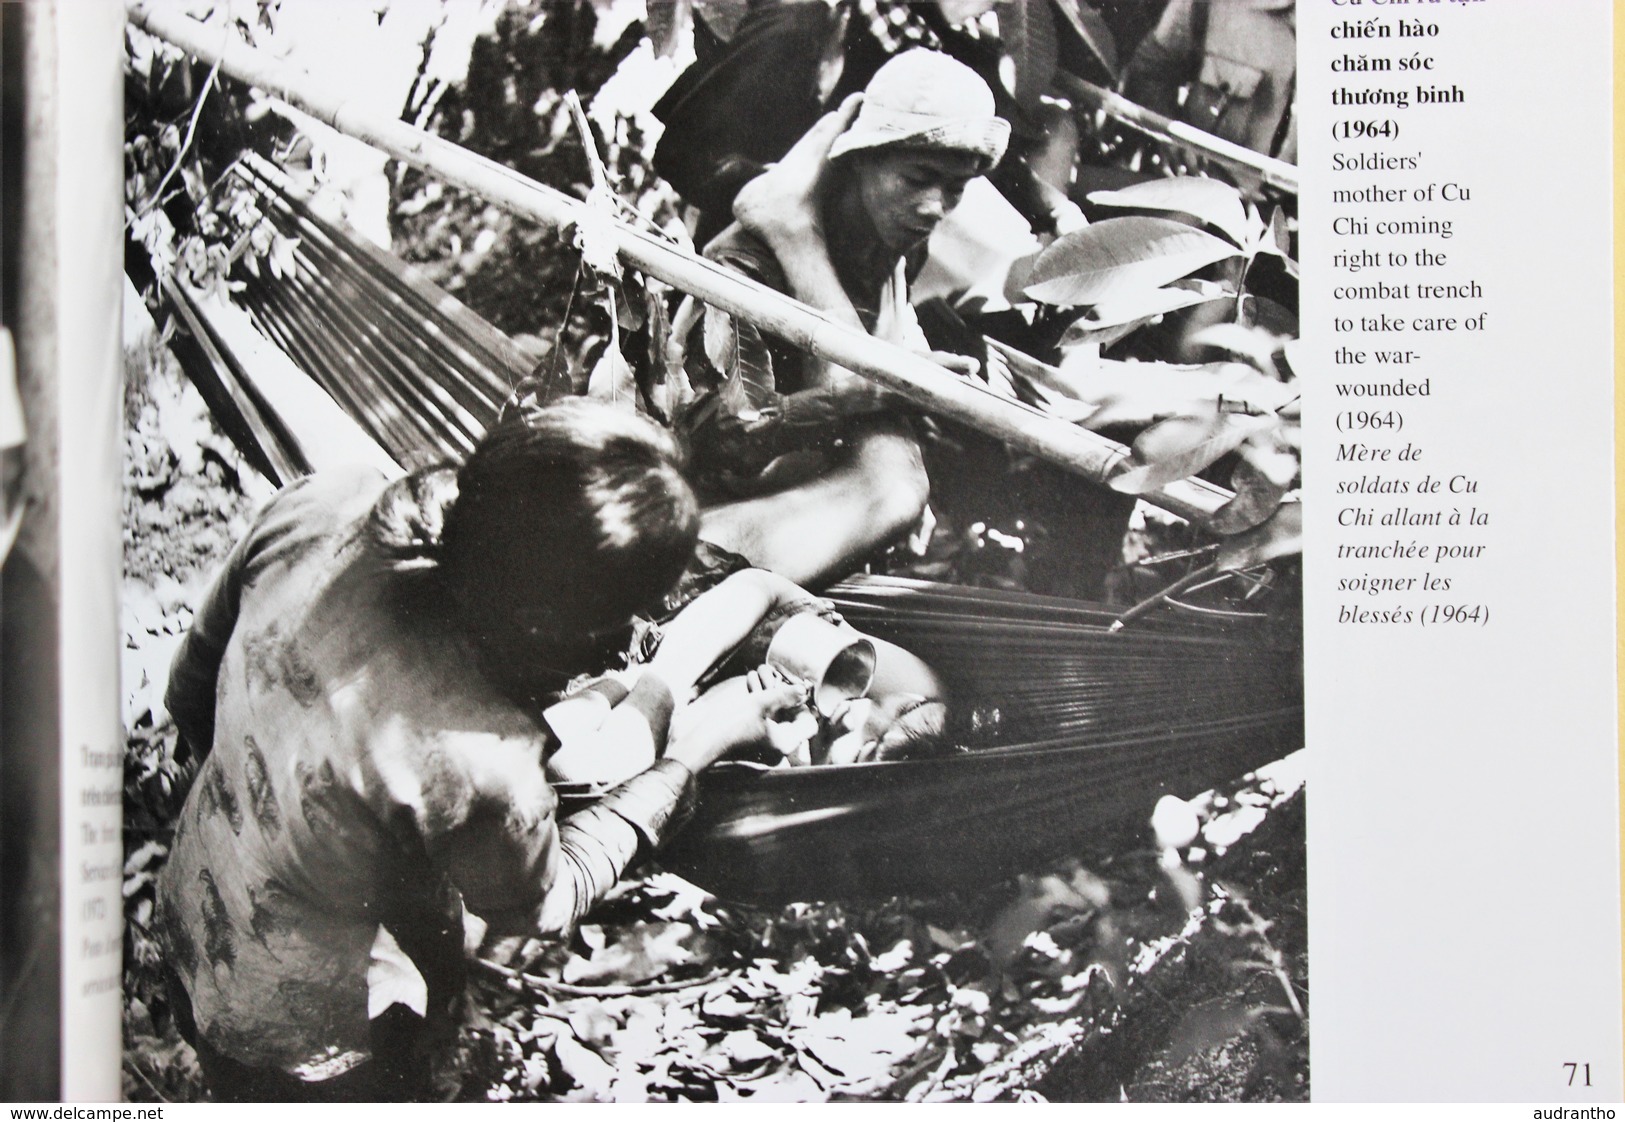 livre CU CHI Cuchi l'album documentaire n°2 1960-1975 guerre du Vietnam